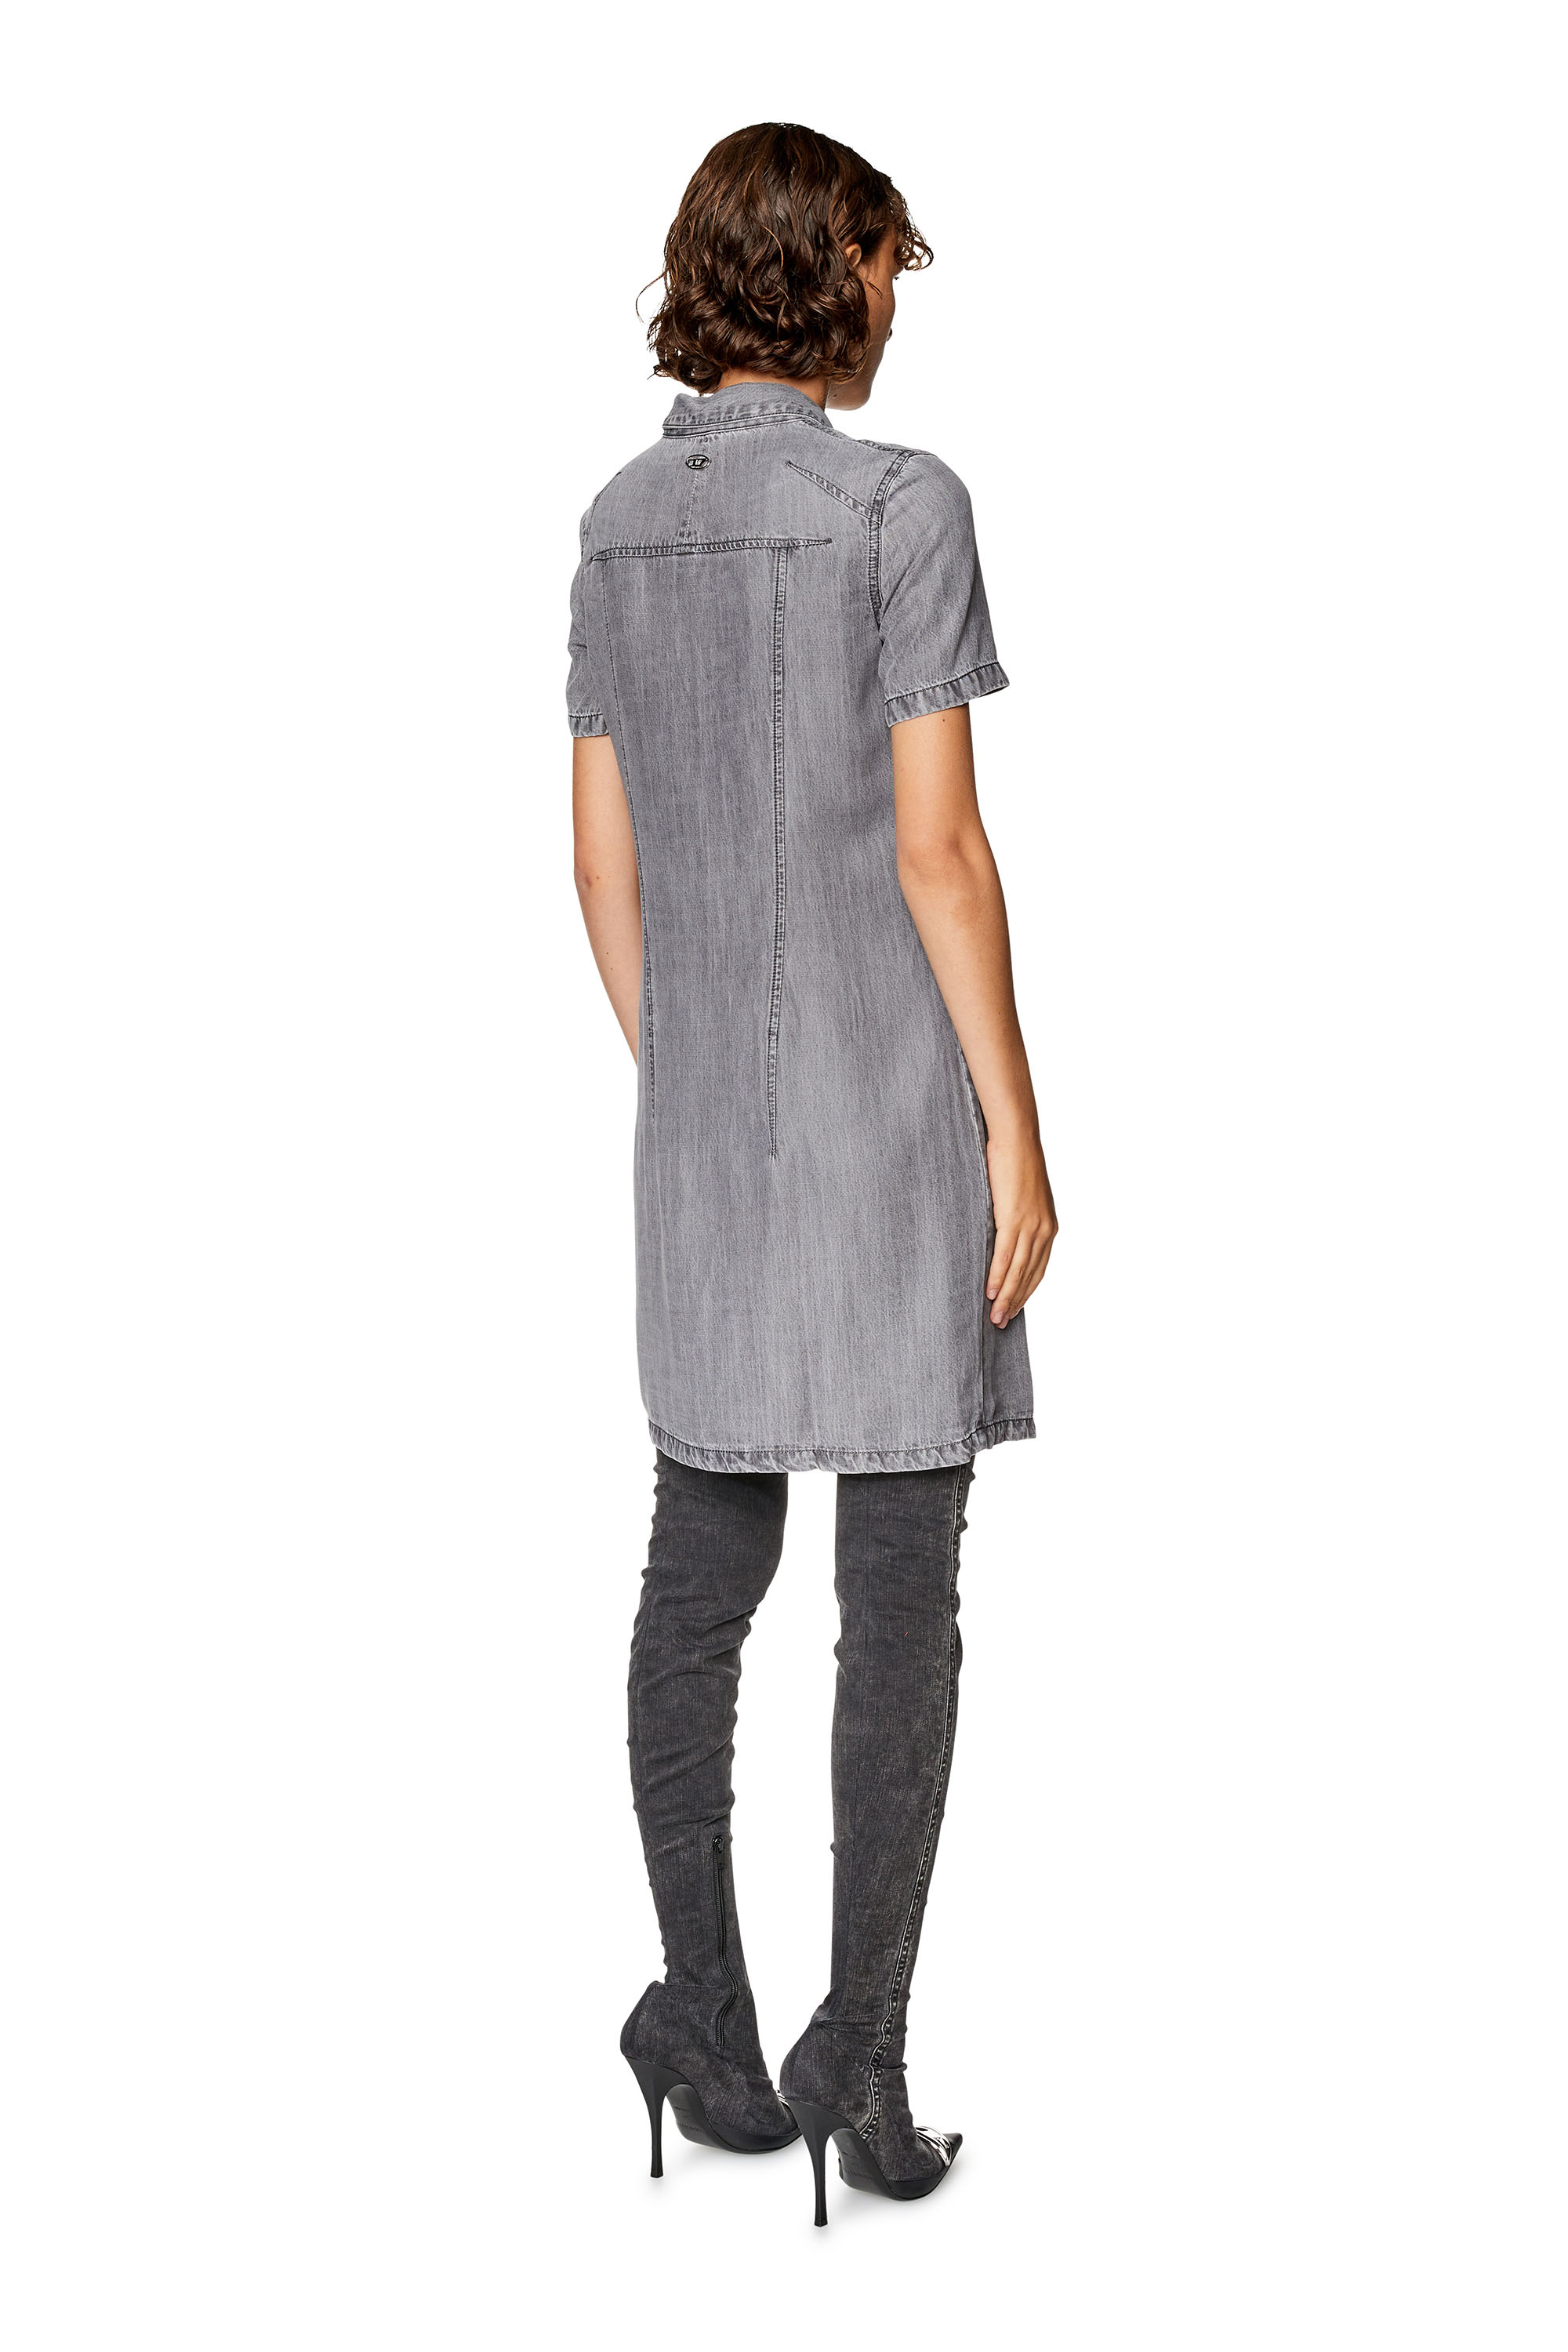 Diesel - DE-SHIRTY, Woman Buttoned shirt dress in light denim in Grey - Image 2